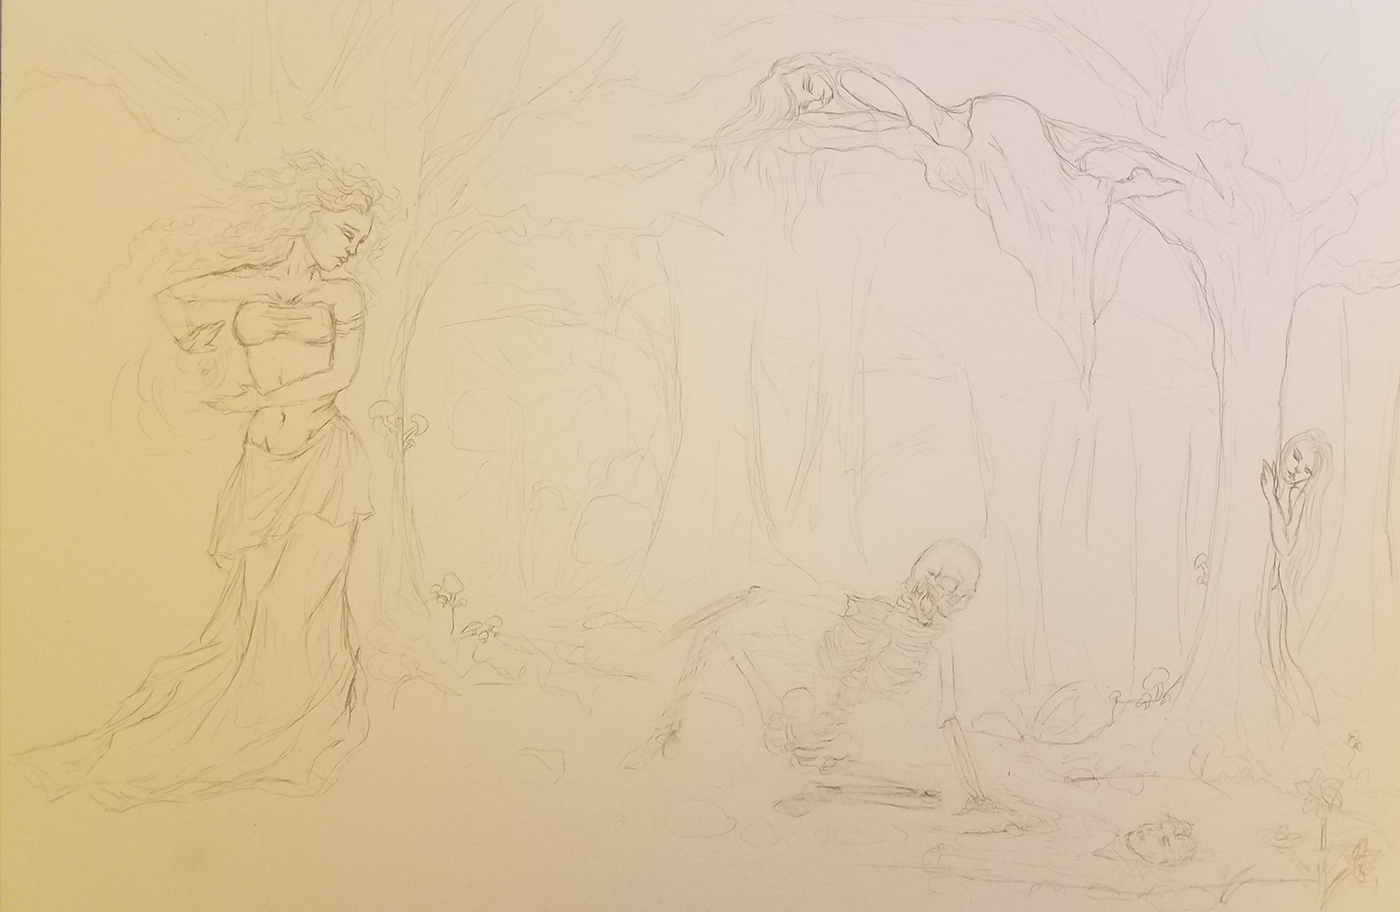 #narcissus #watercolor #sketch #paint #drawing #goddess #daffodil #forestpainting #trees #shadow #skeleton #creepy #dark #fantasy #mythology #vanity #ego #reflection